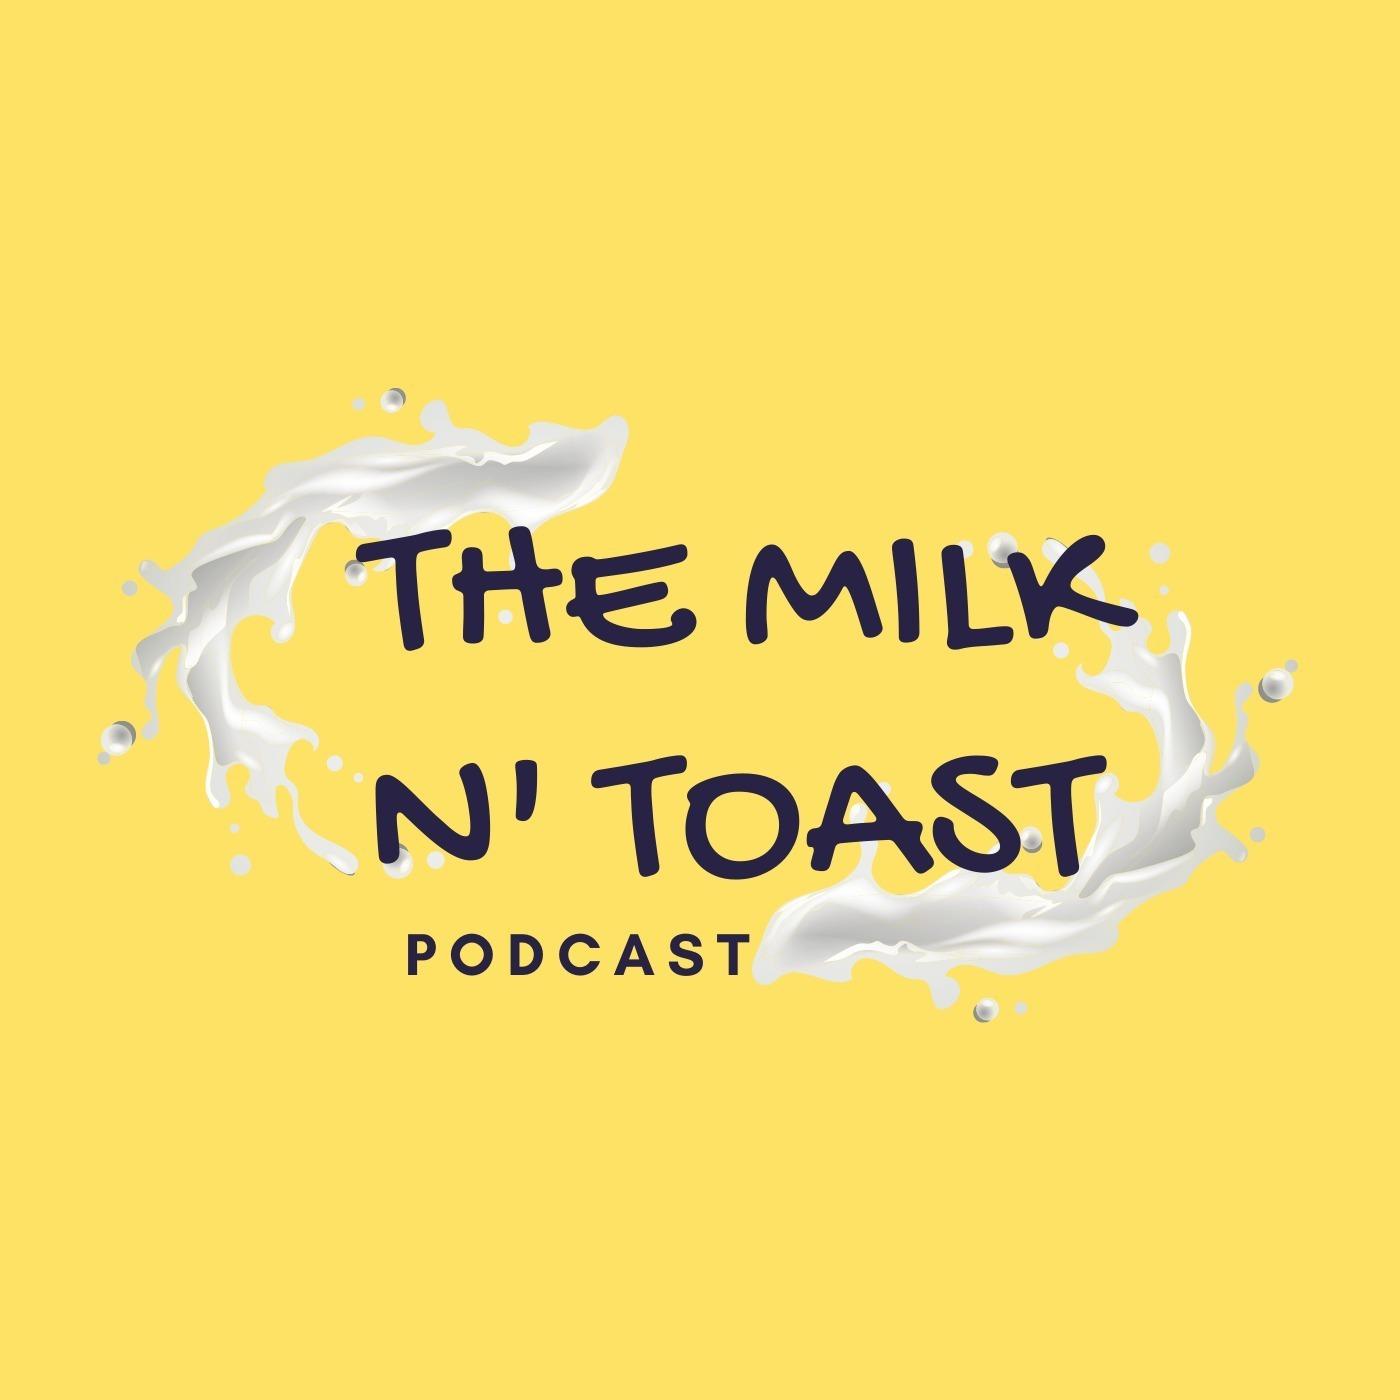 The milk n' toast Podcast™